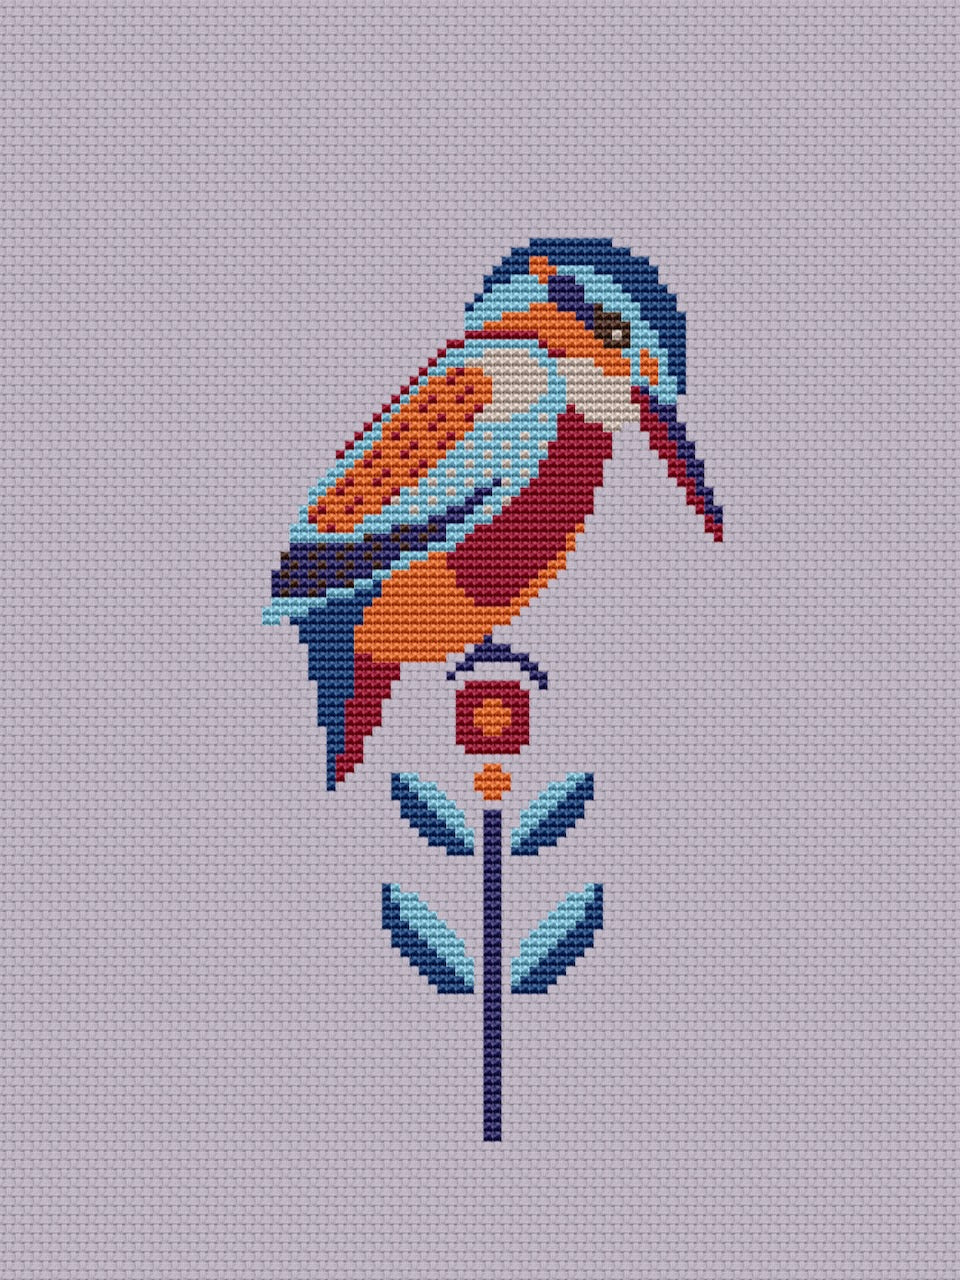 kingfisher bird cross stitch pattern